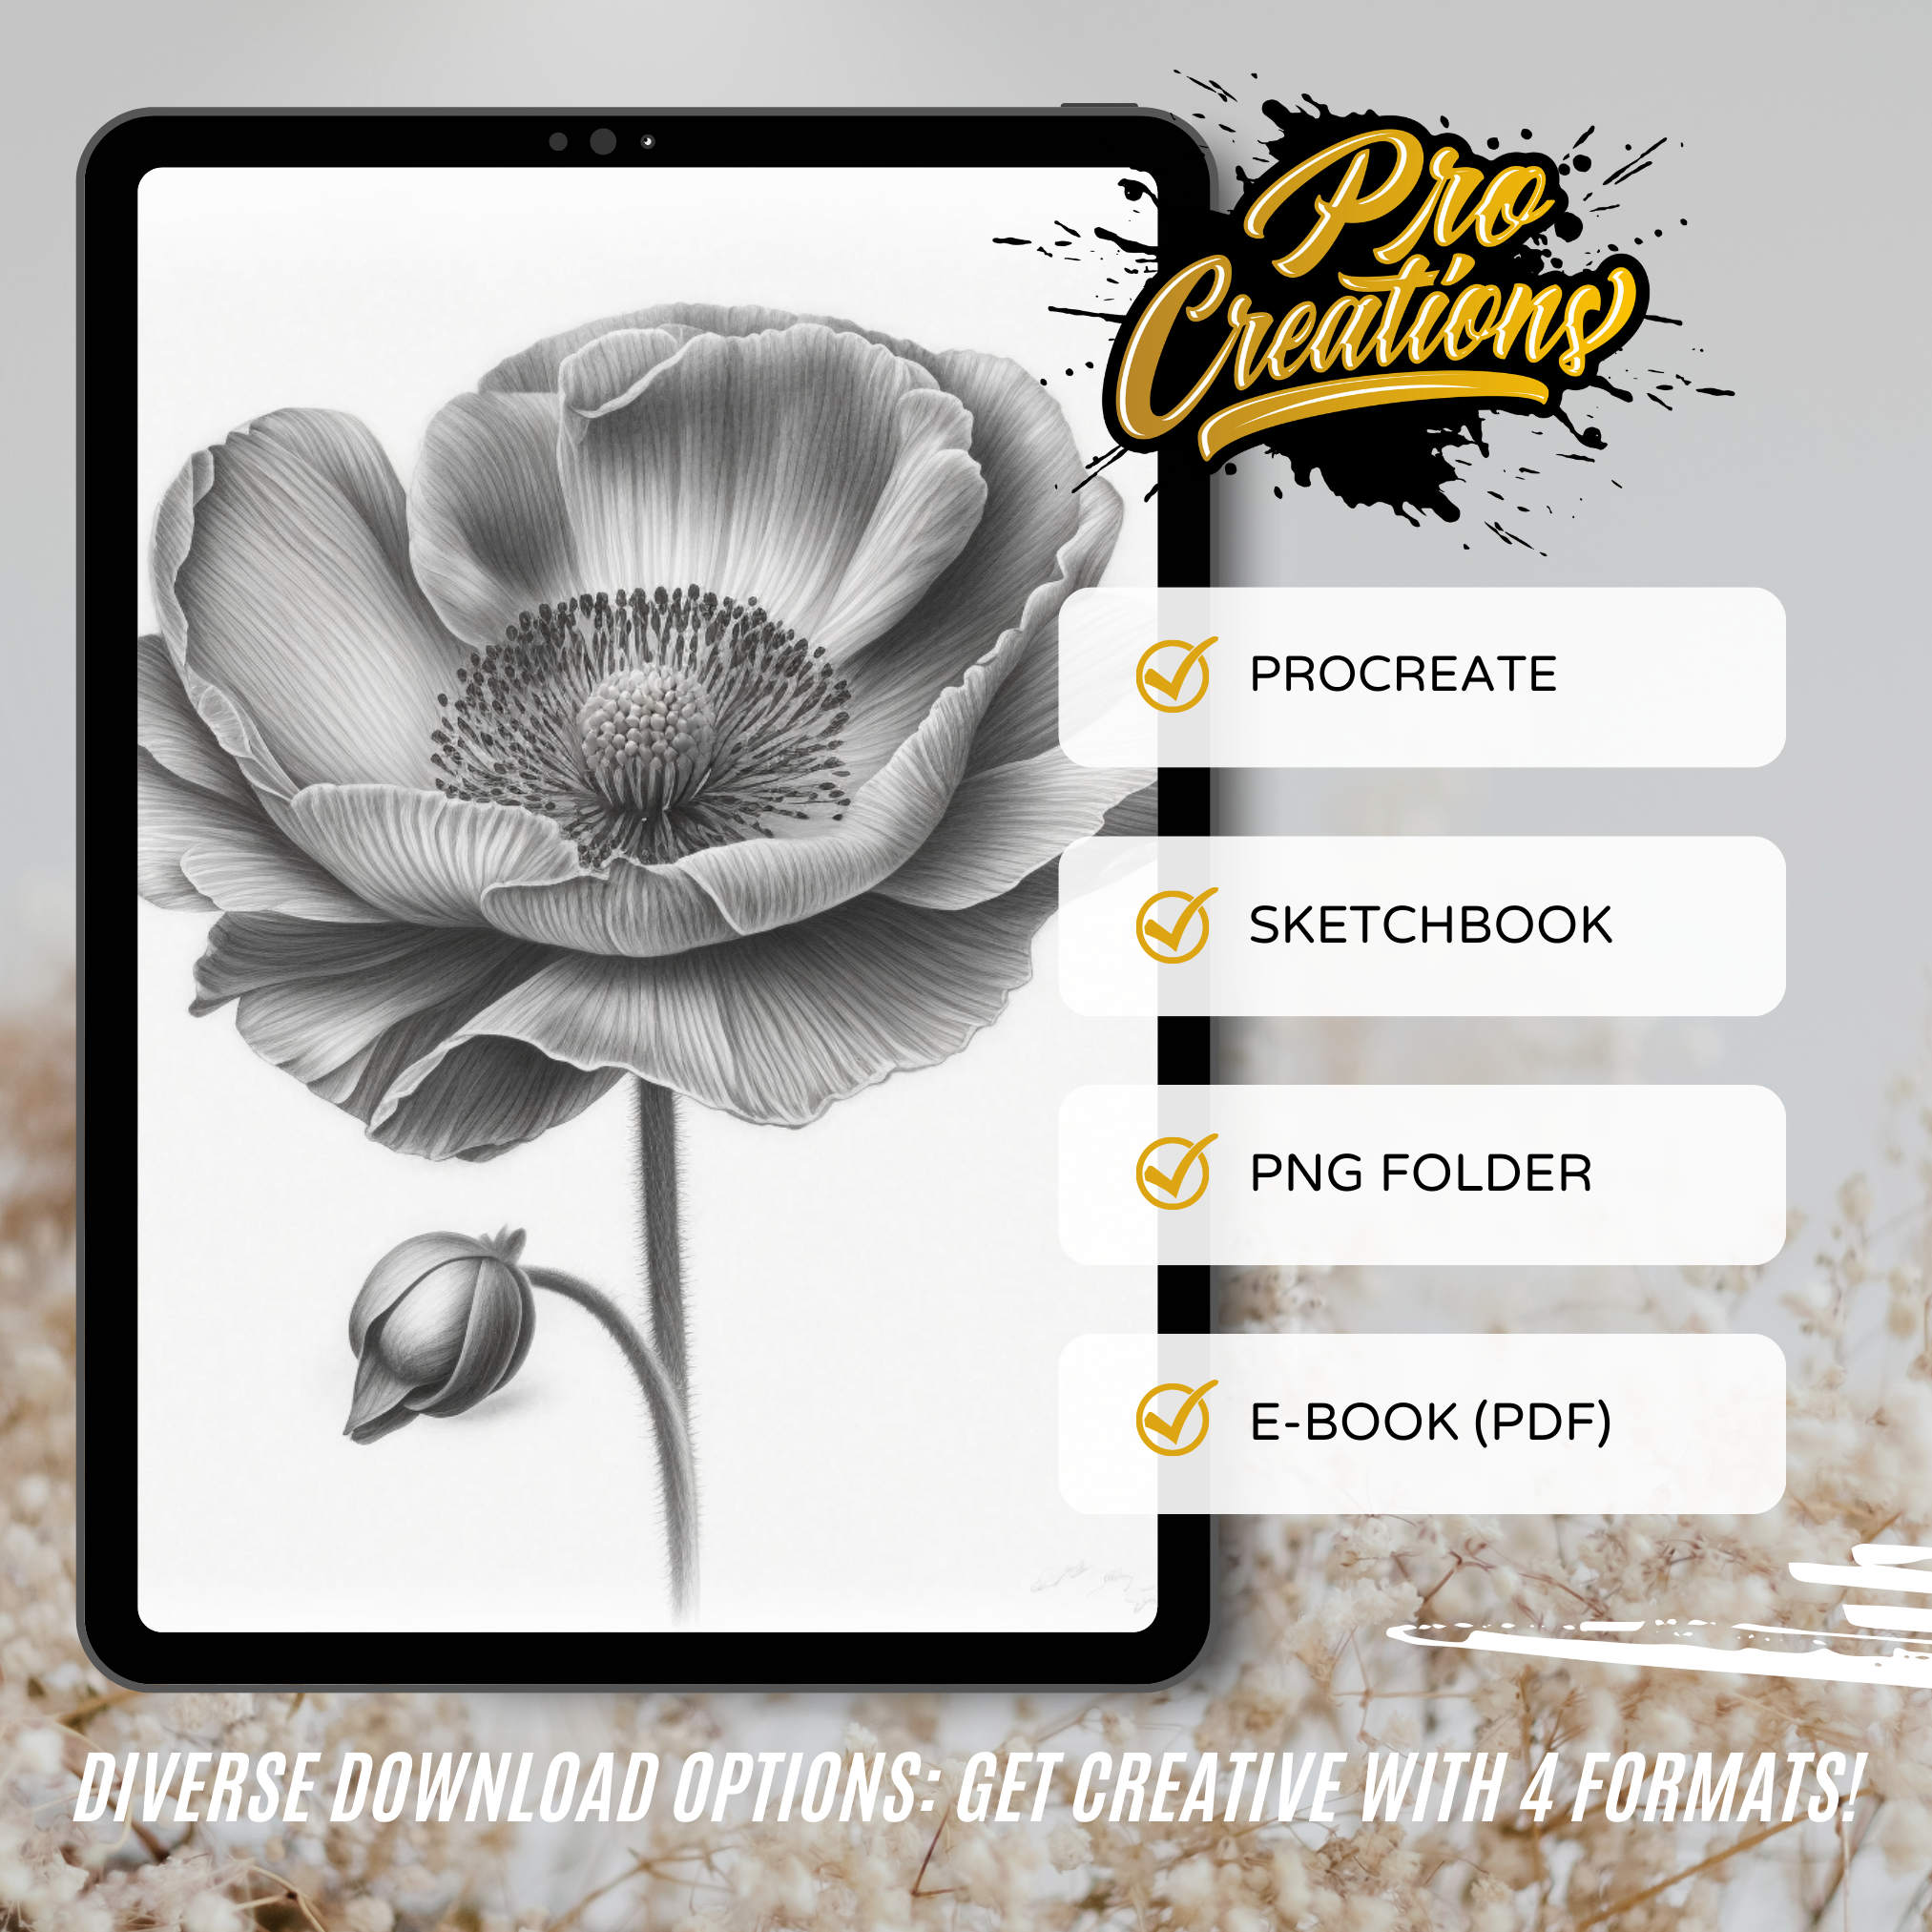 Poppies Digital Design Collection: 50 Procreate & Sketchbook Images